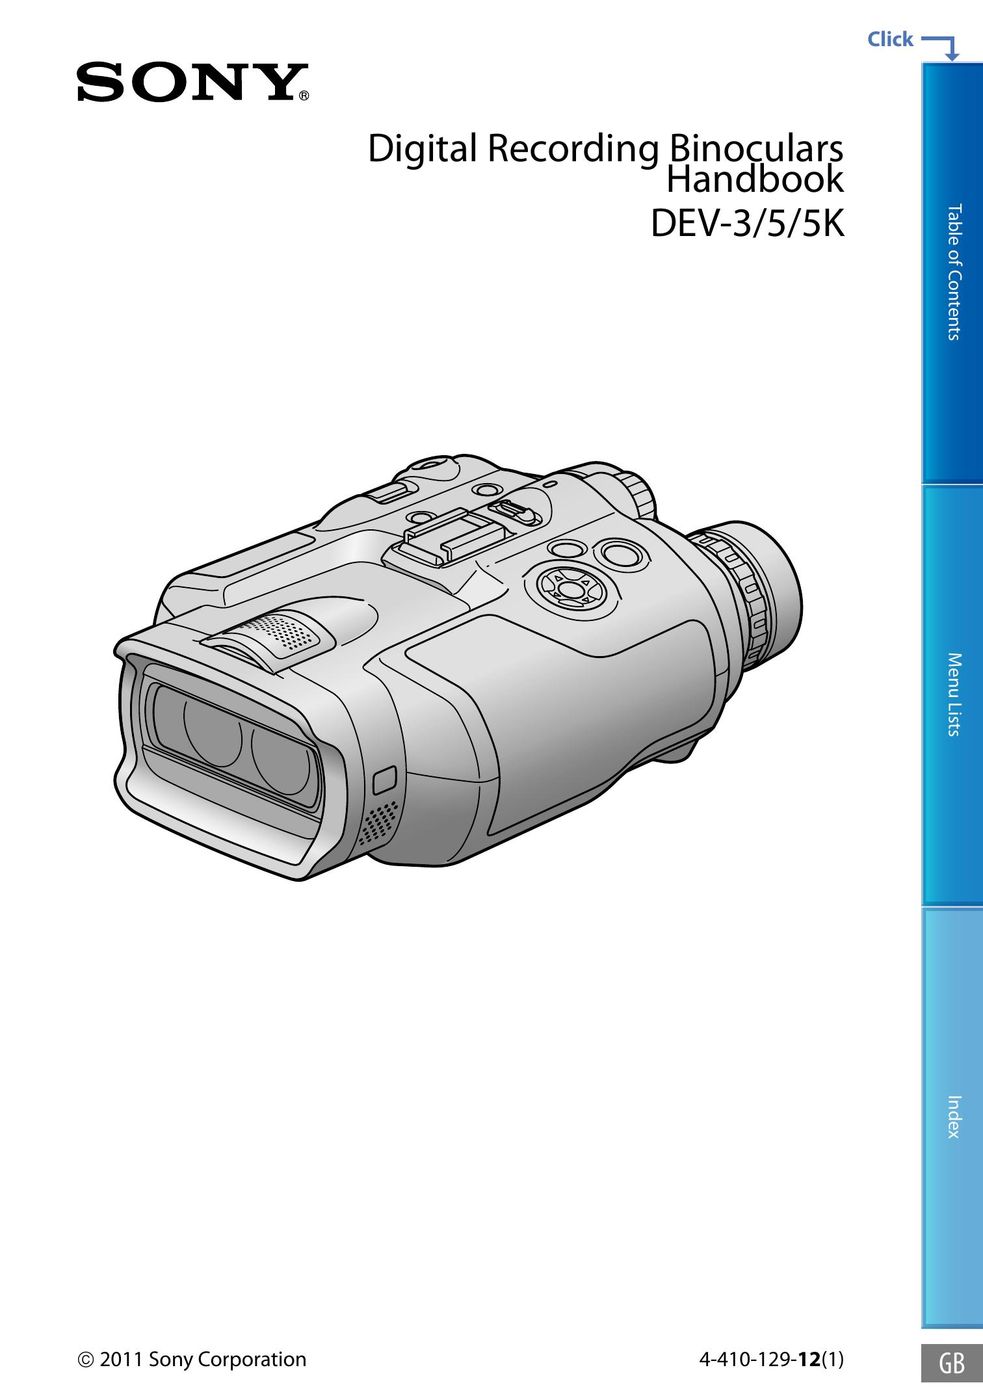 Sony DEV-5 Binoculars User Manual